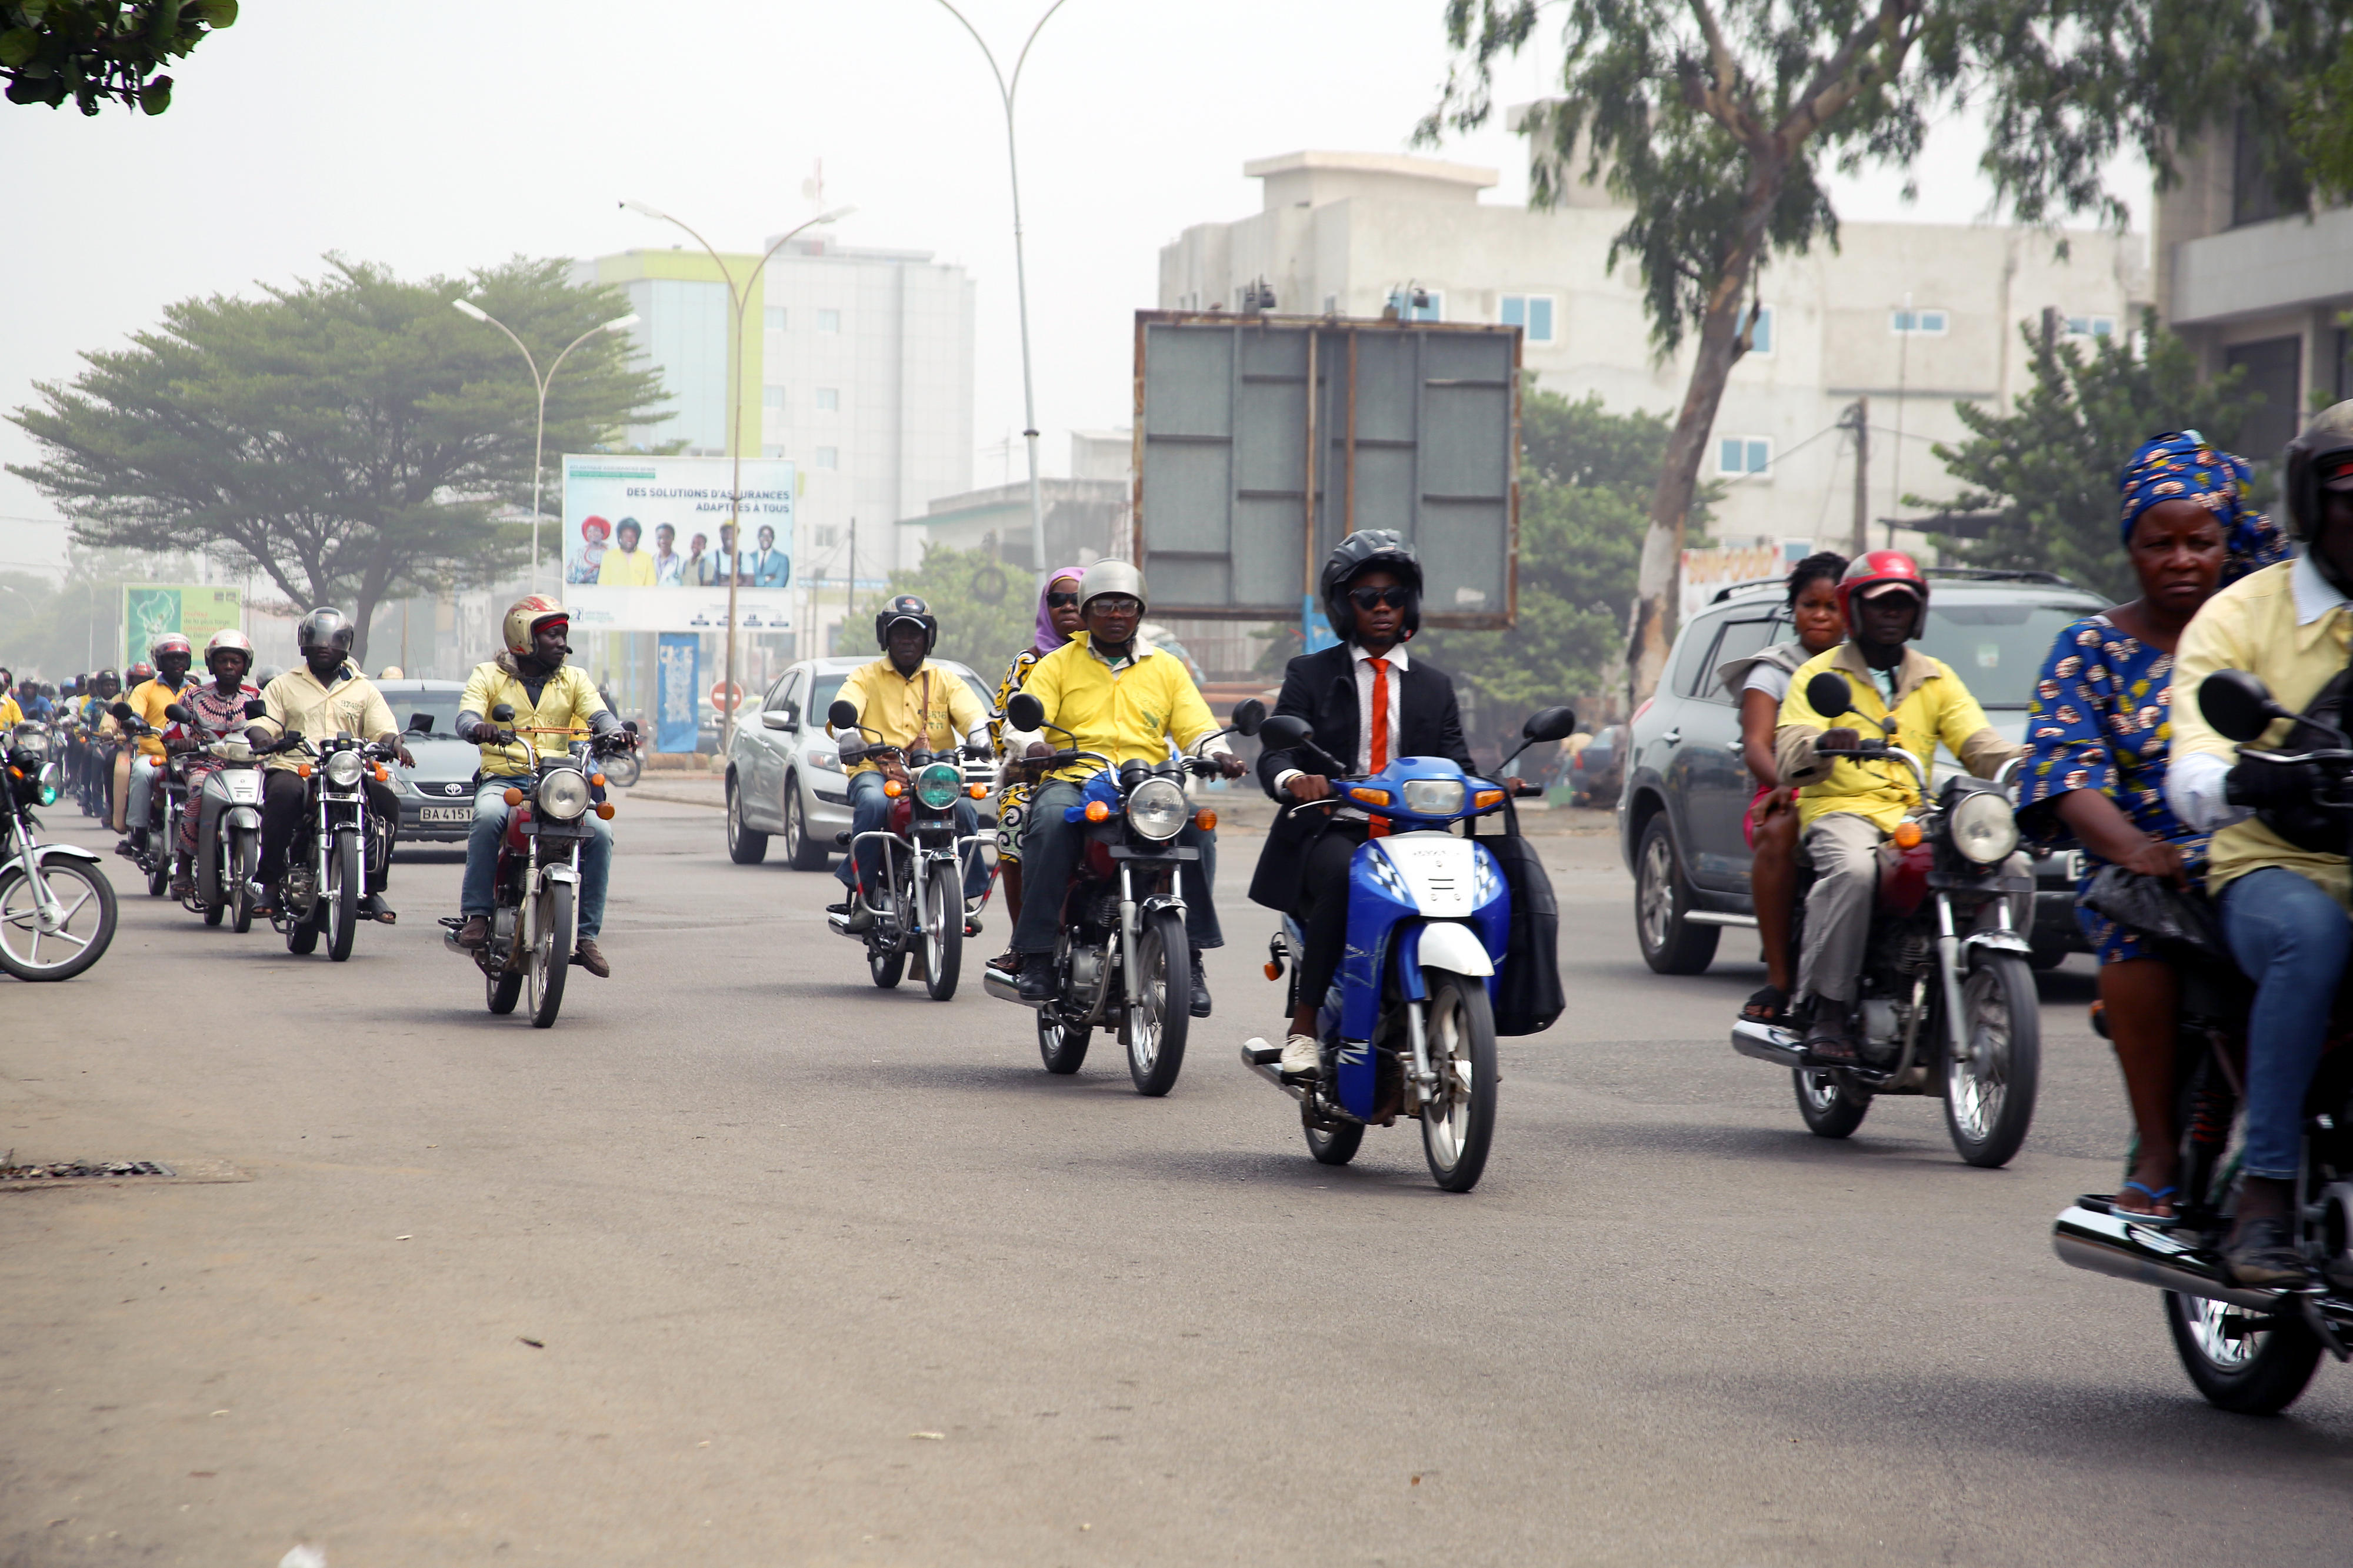 Mopedfahrer in Cotonou